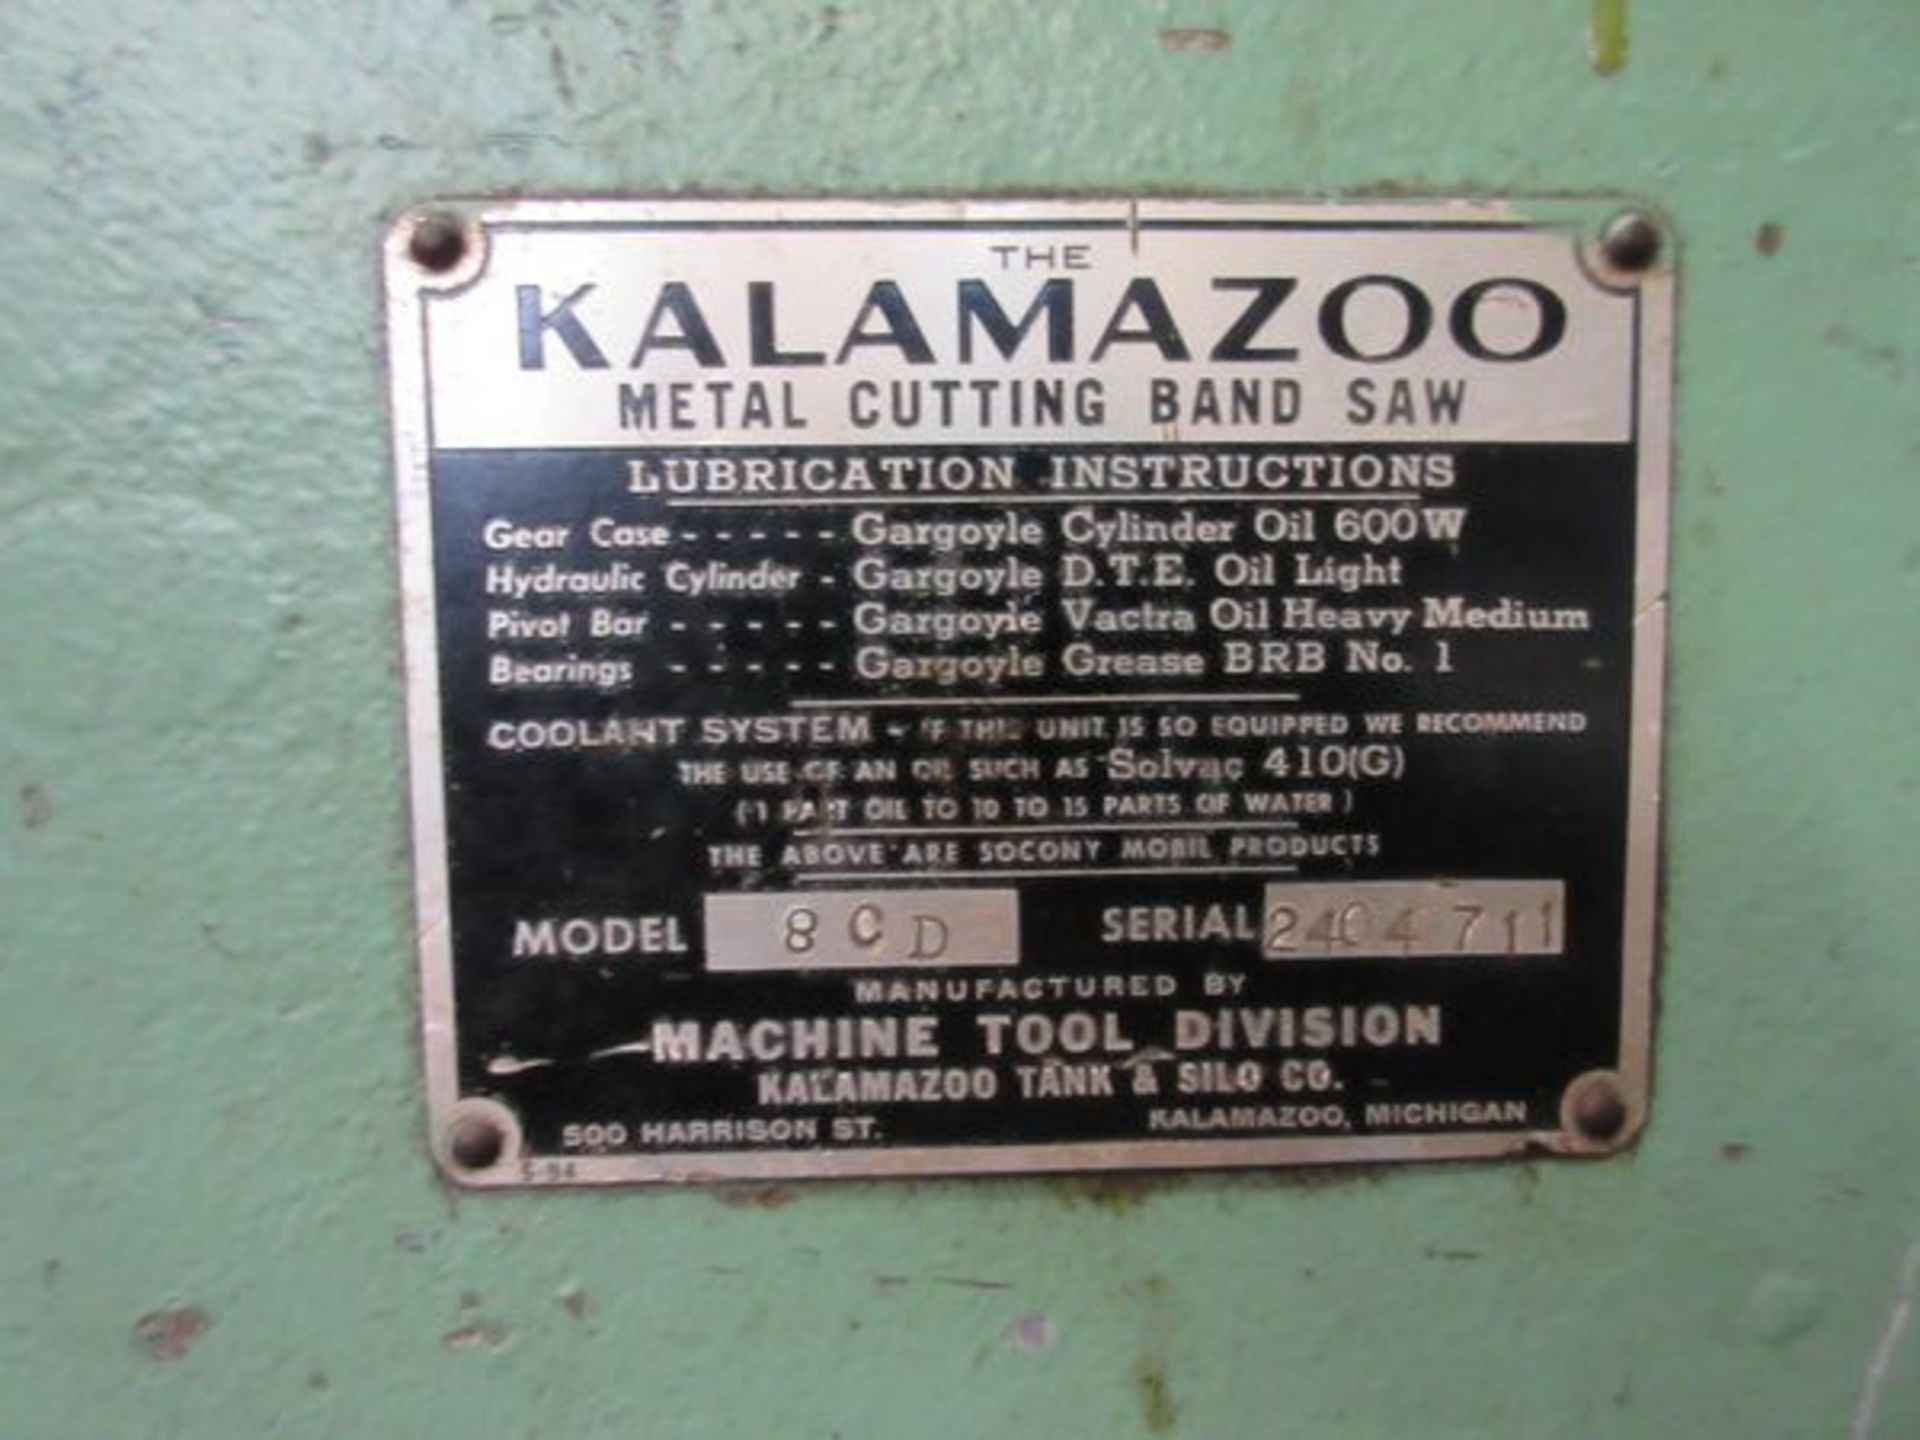 Kalamazoo #8CD Metal Cutting Horizontal Band Saw, S/N 2404-711 - Image 2 of 3